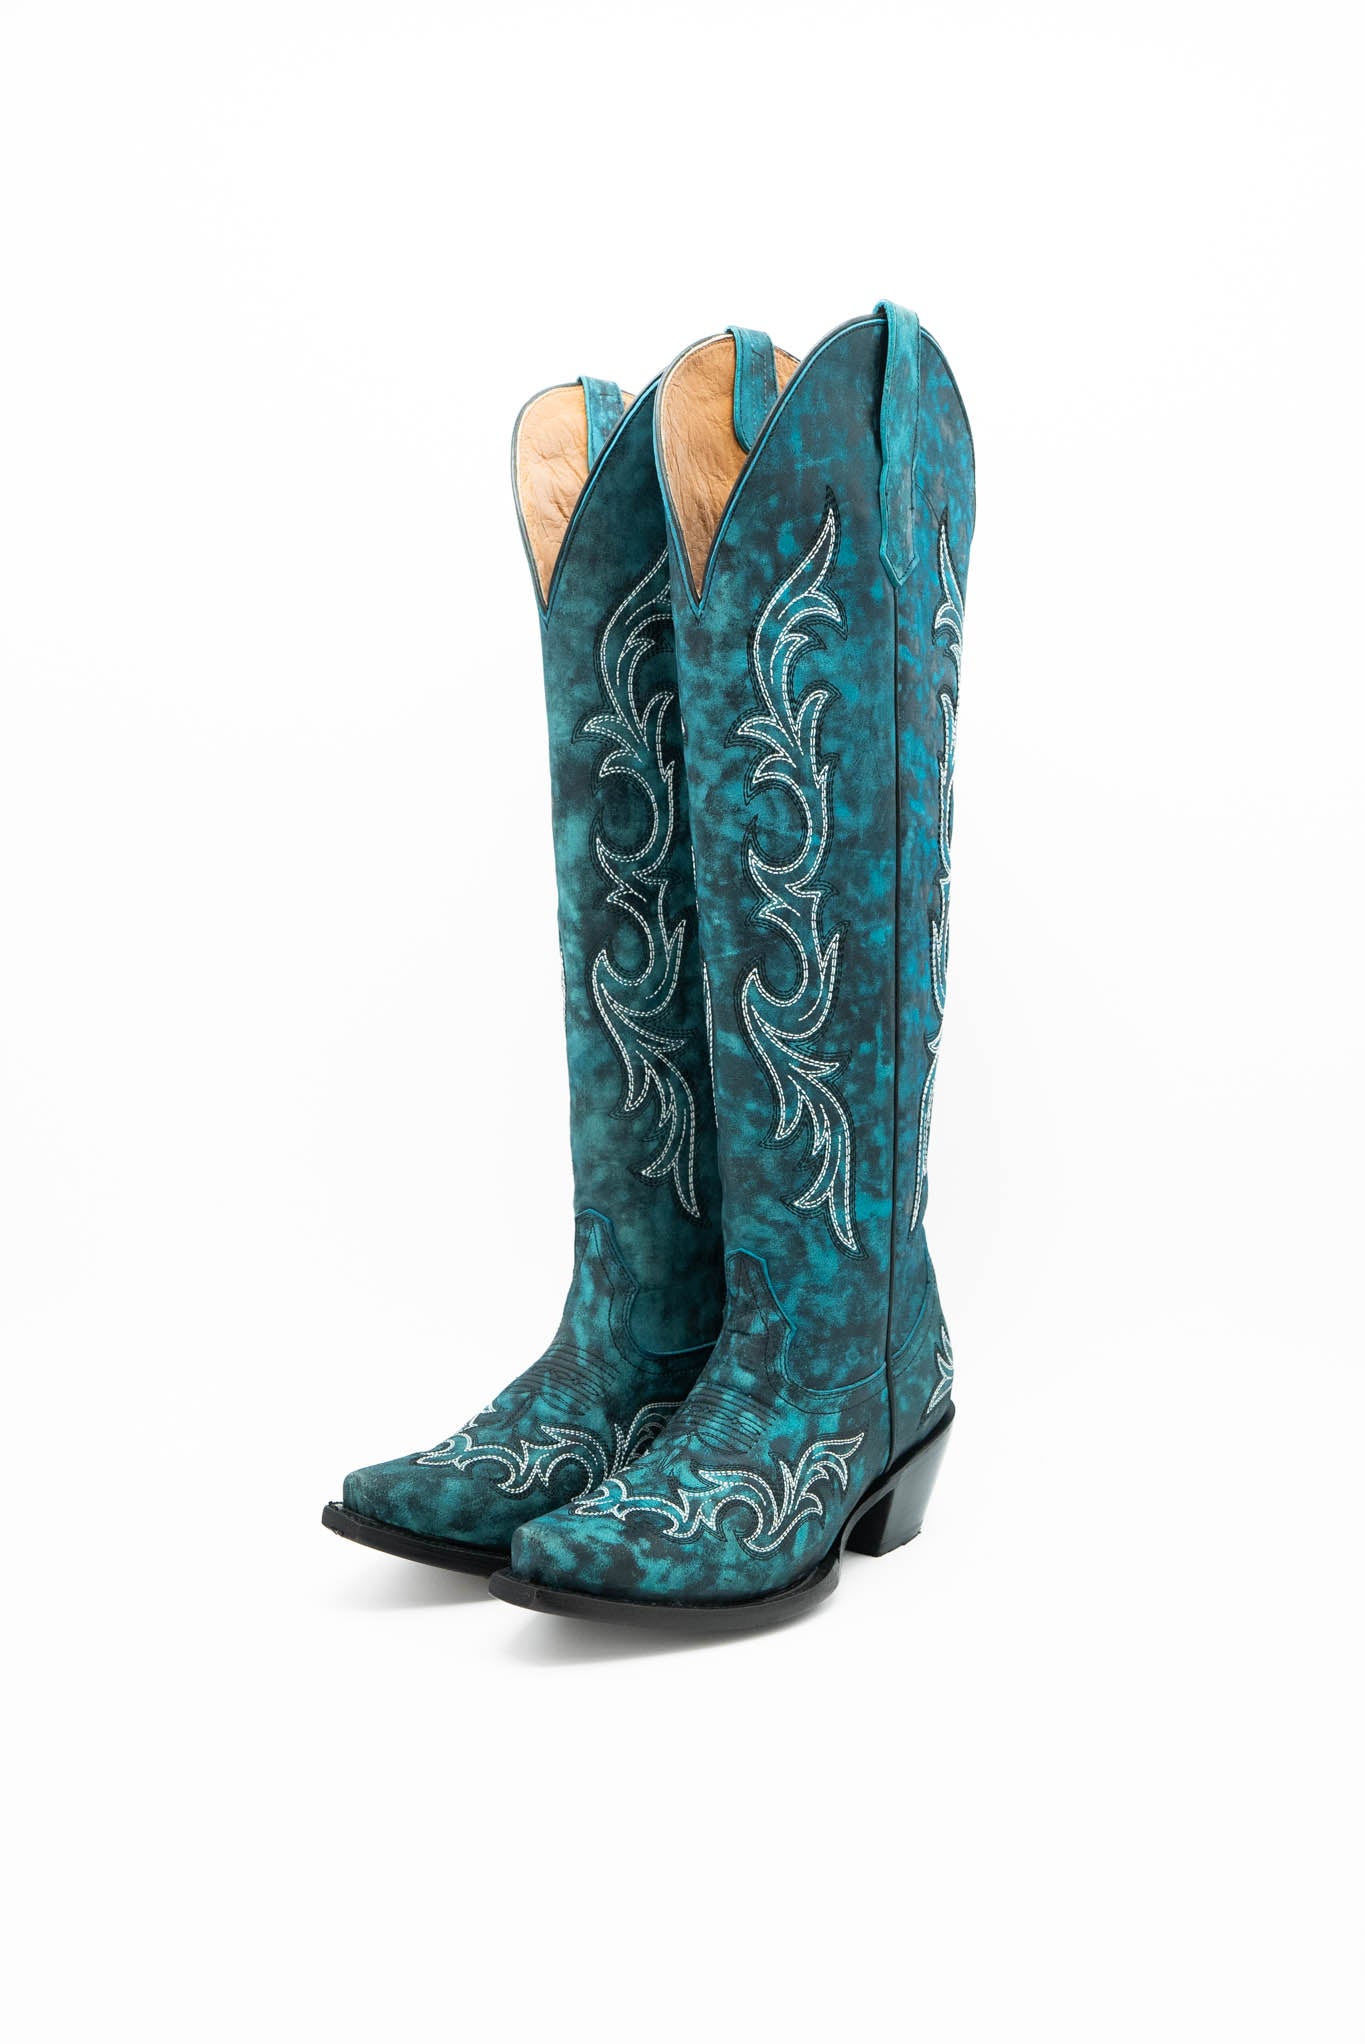 Jenny Tall Snip Toe Cowgirl Boot